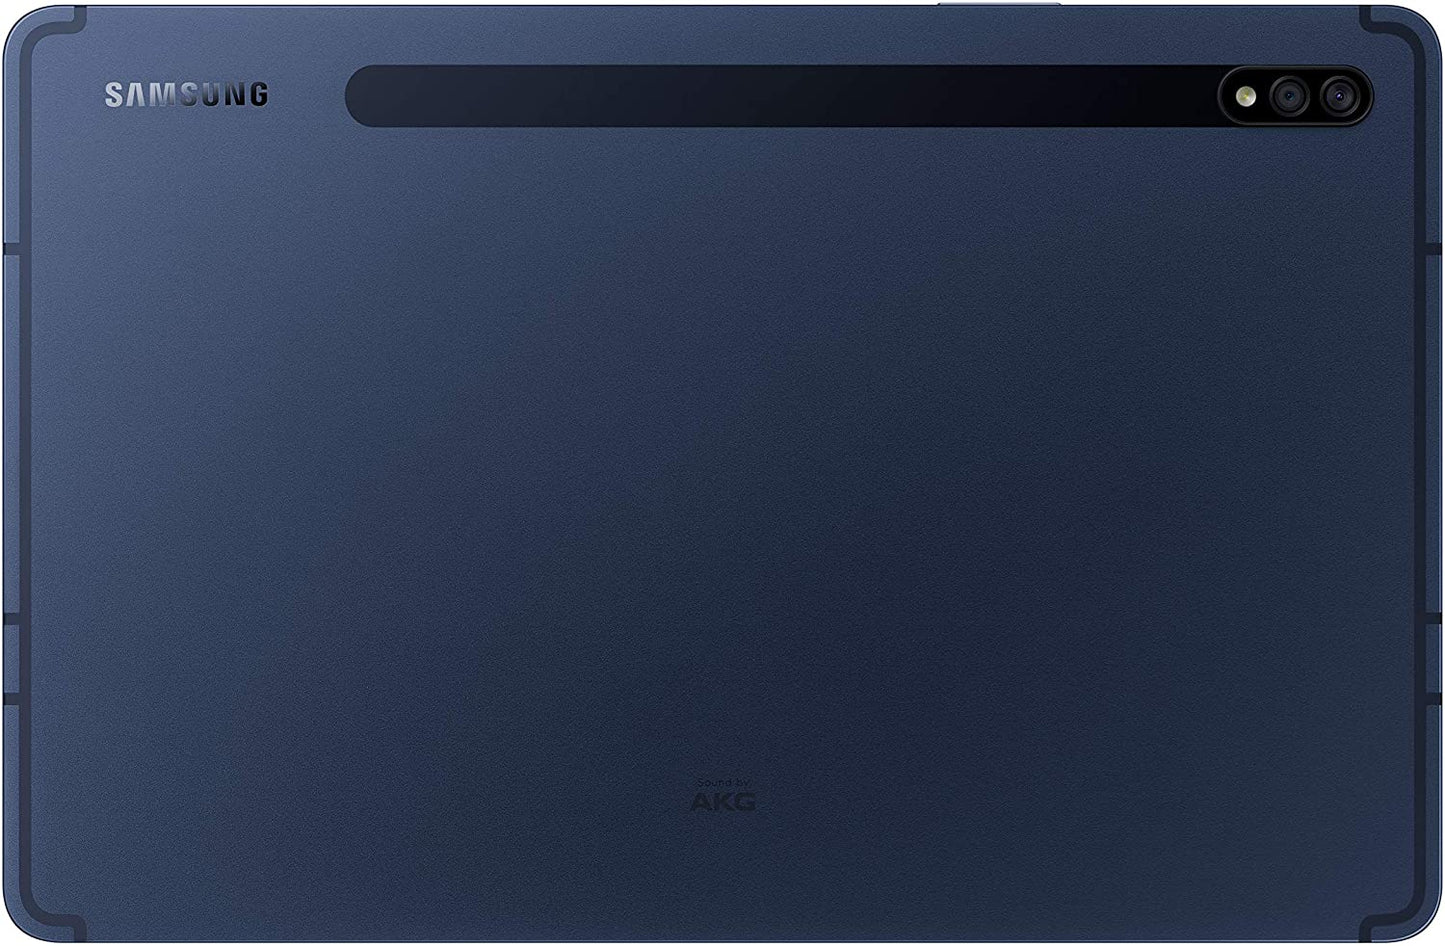 Samsung Galaxy Tab S7 11-in 256GB Tablet - Phantom Navy SM-T870NDBEXAR (2021)